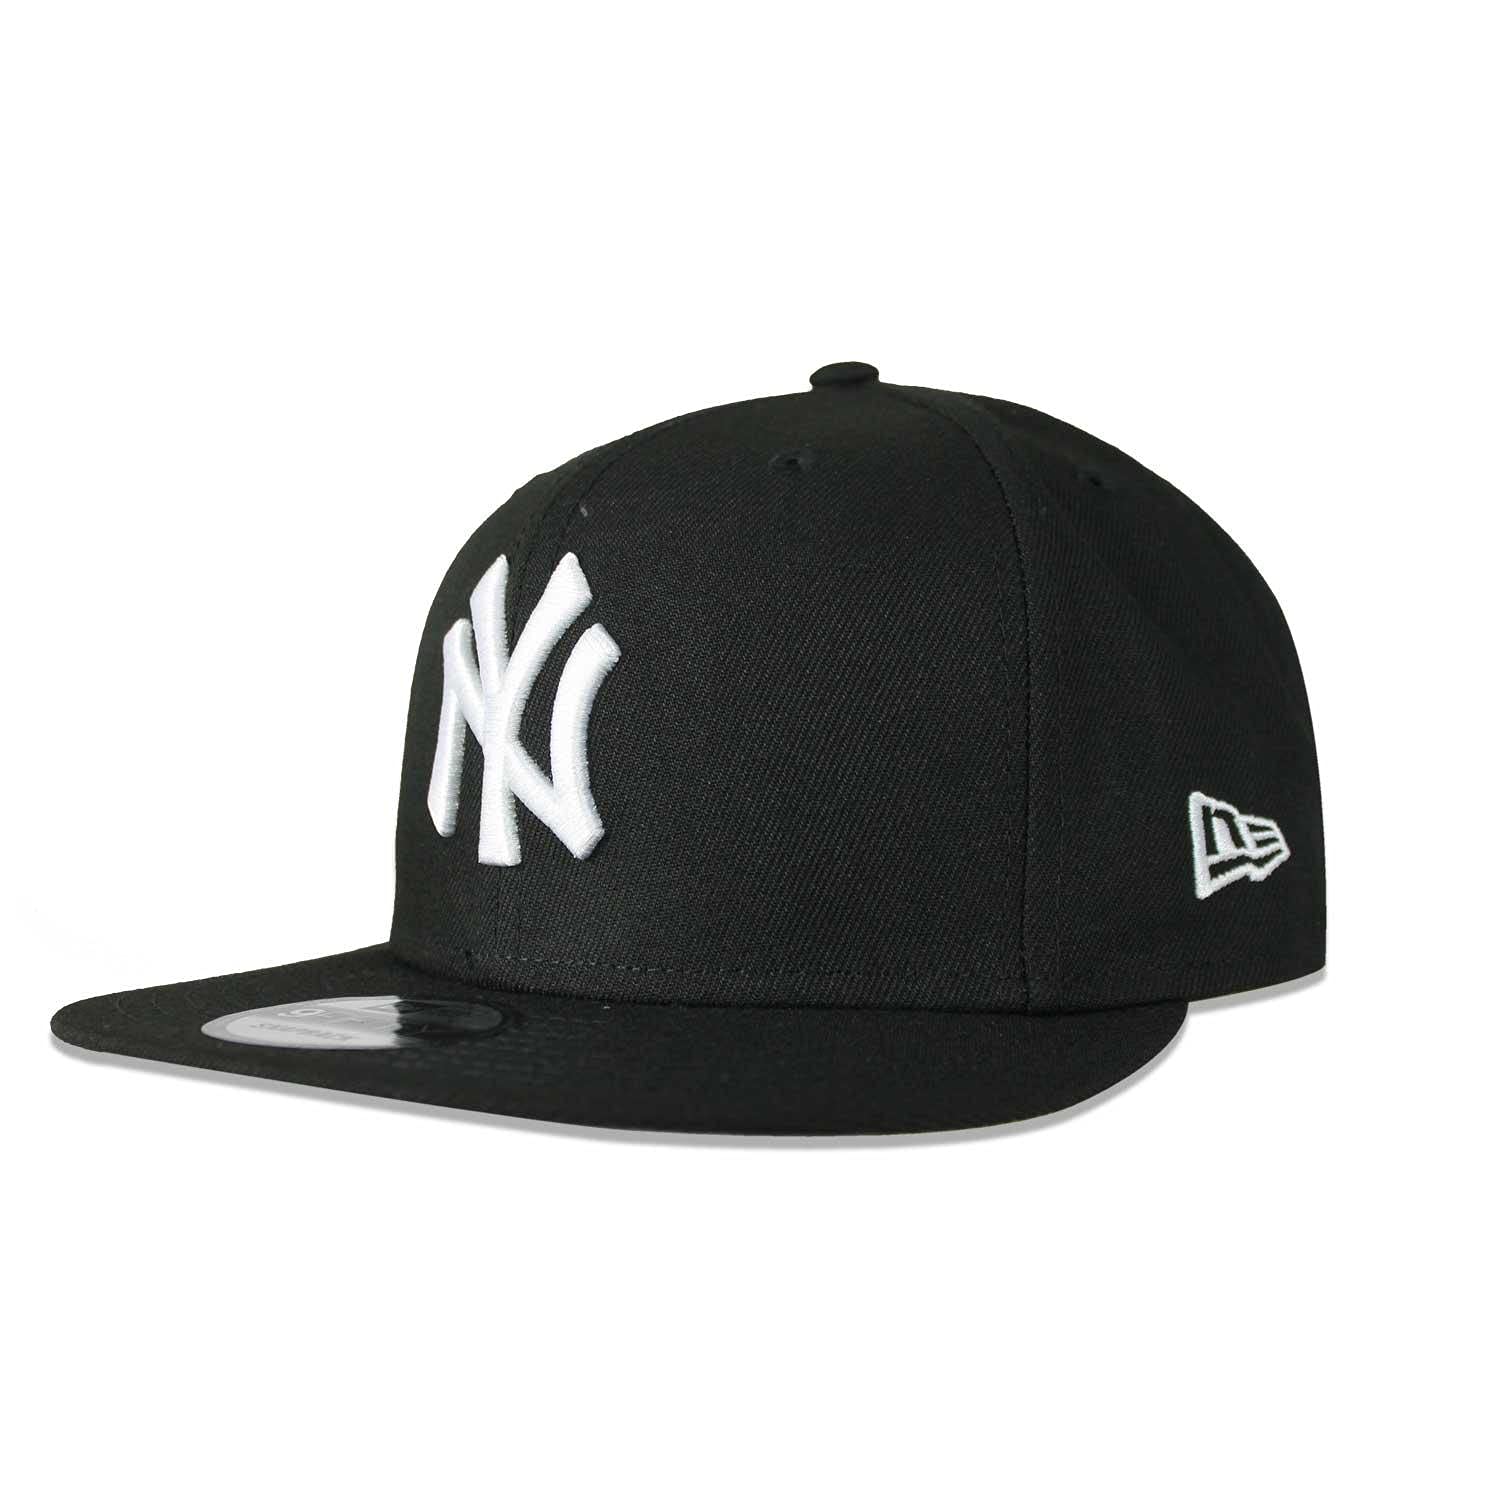 New Era MLB 9Fifty Snapback Cap - Black - Adjustable